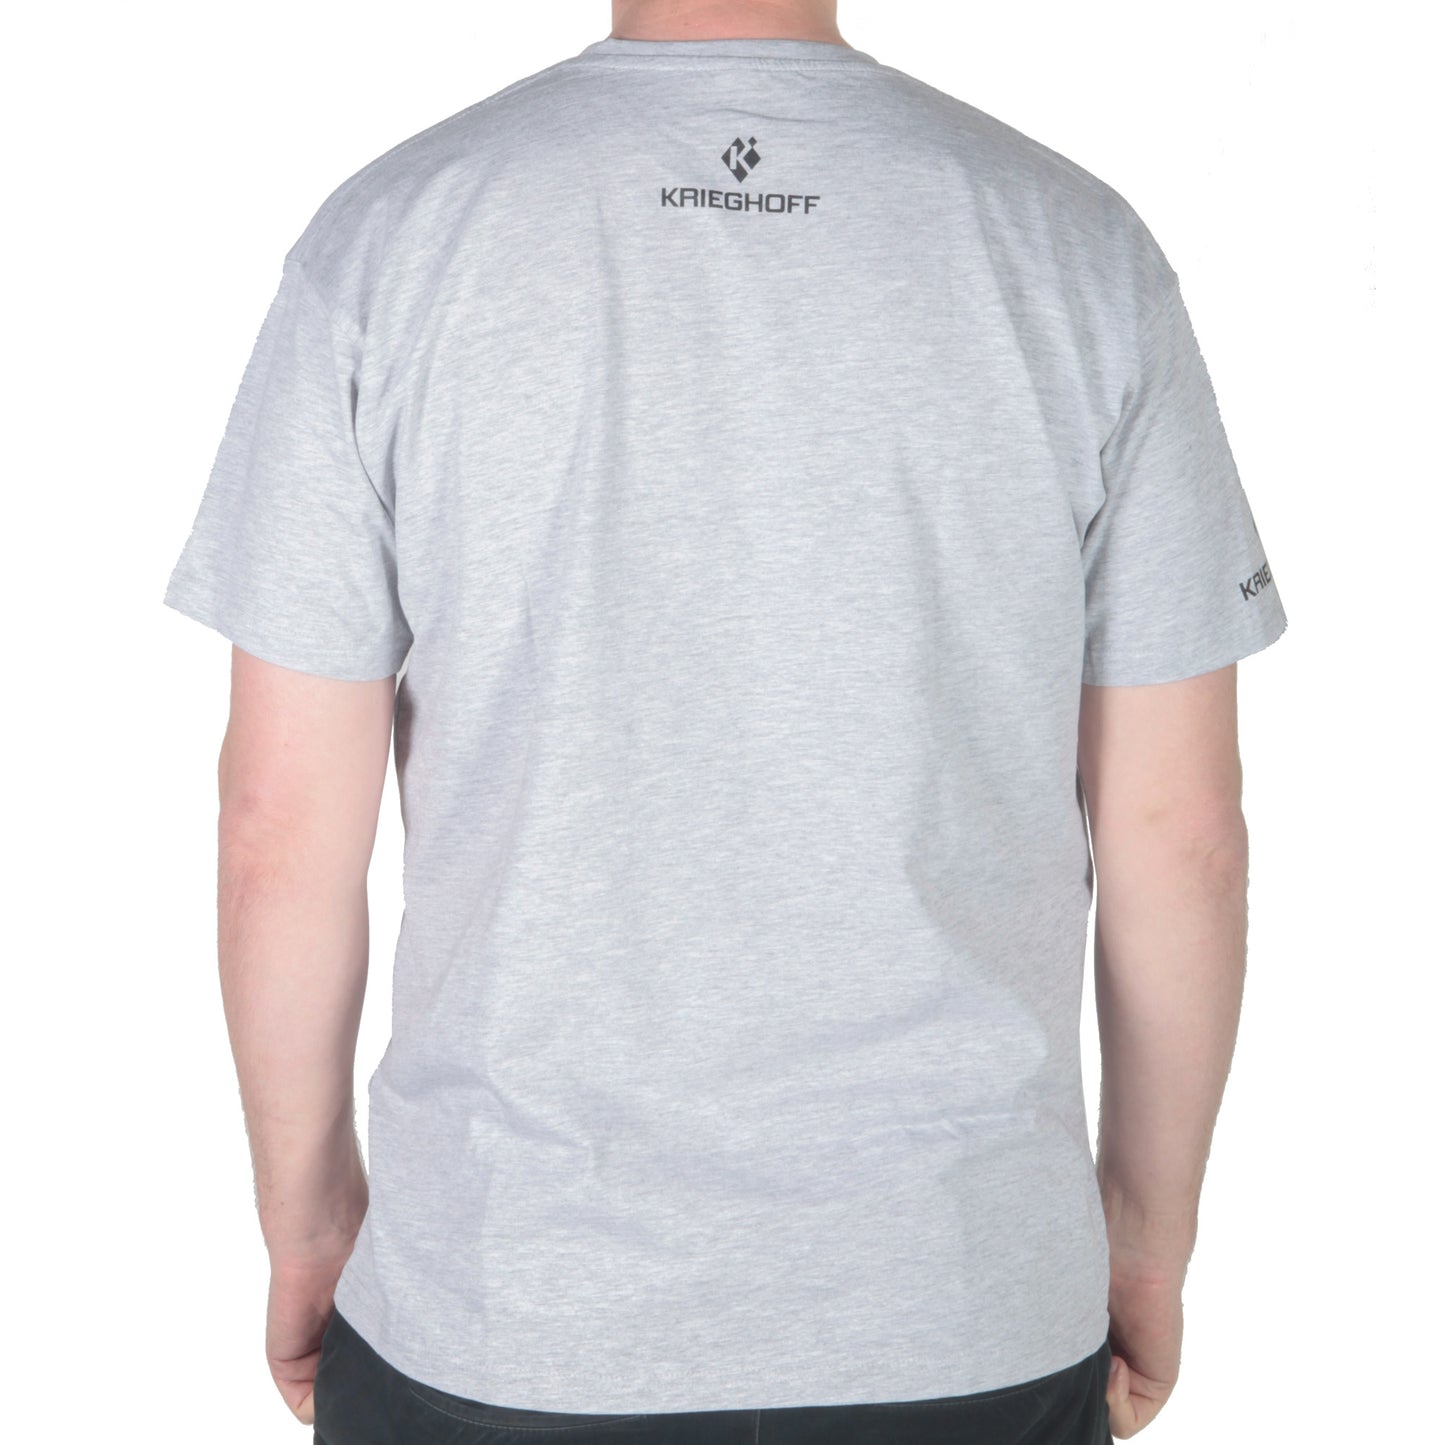 Krieghoff Diamond T-Shirt - Heather Grey